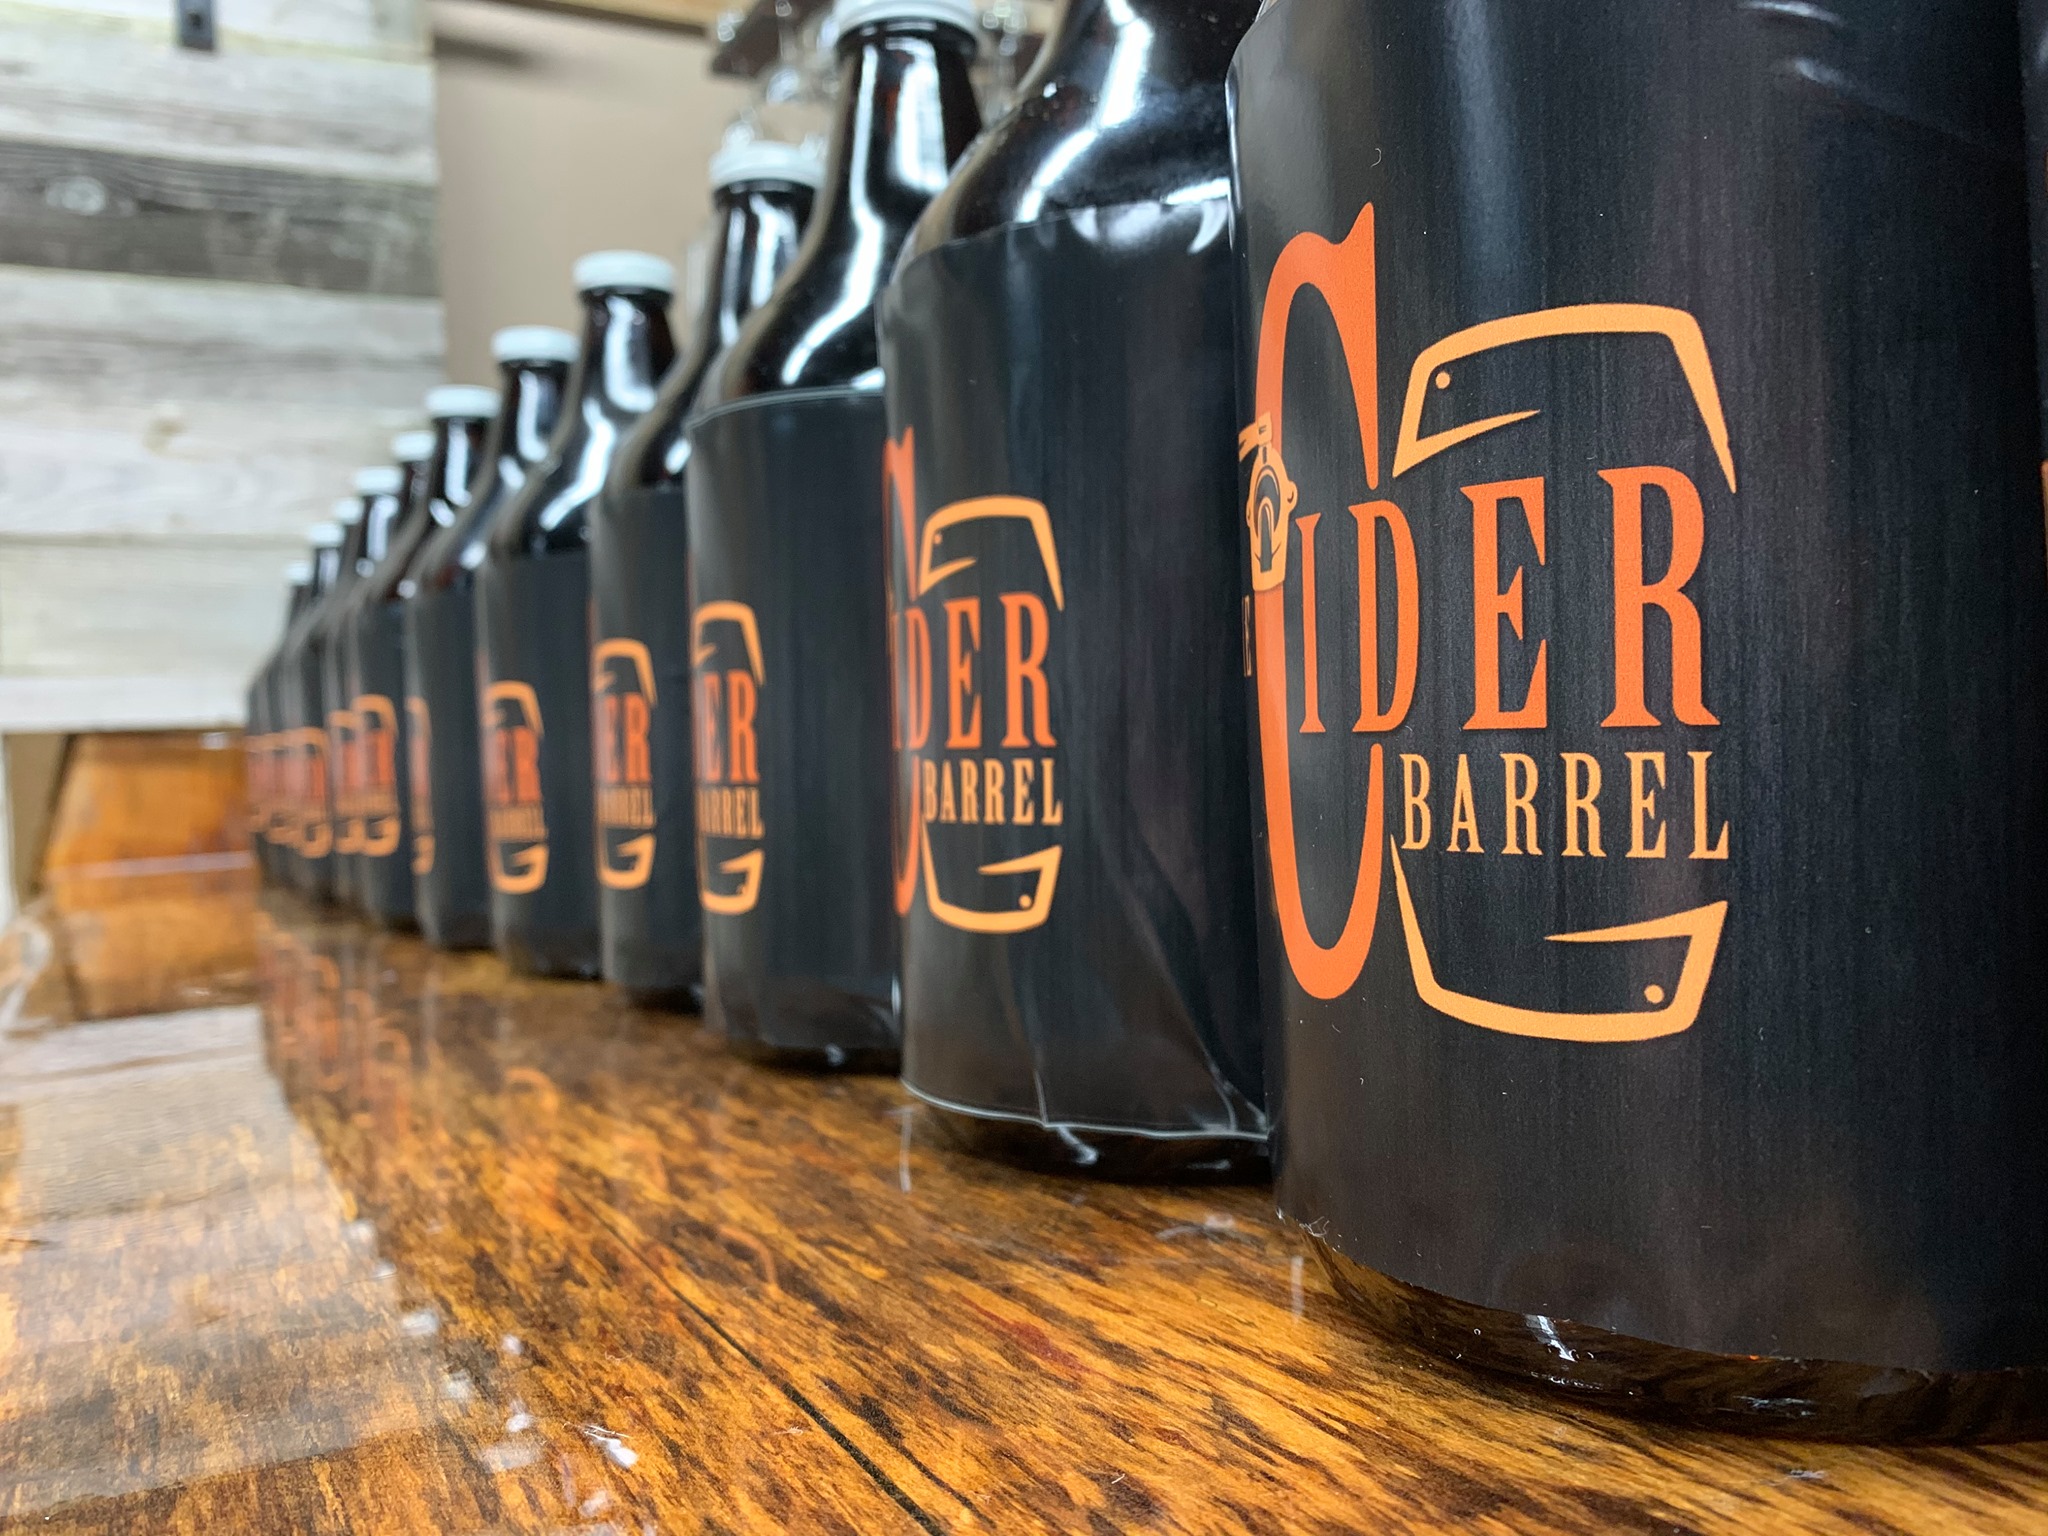 The Cider Barrel (coming soon)